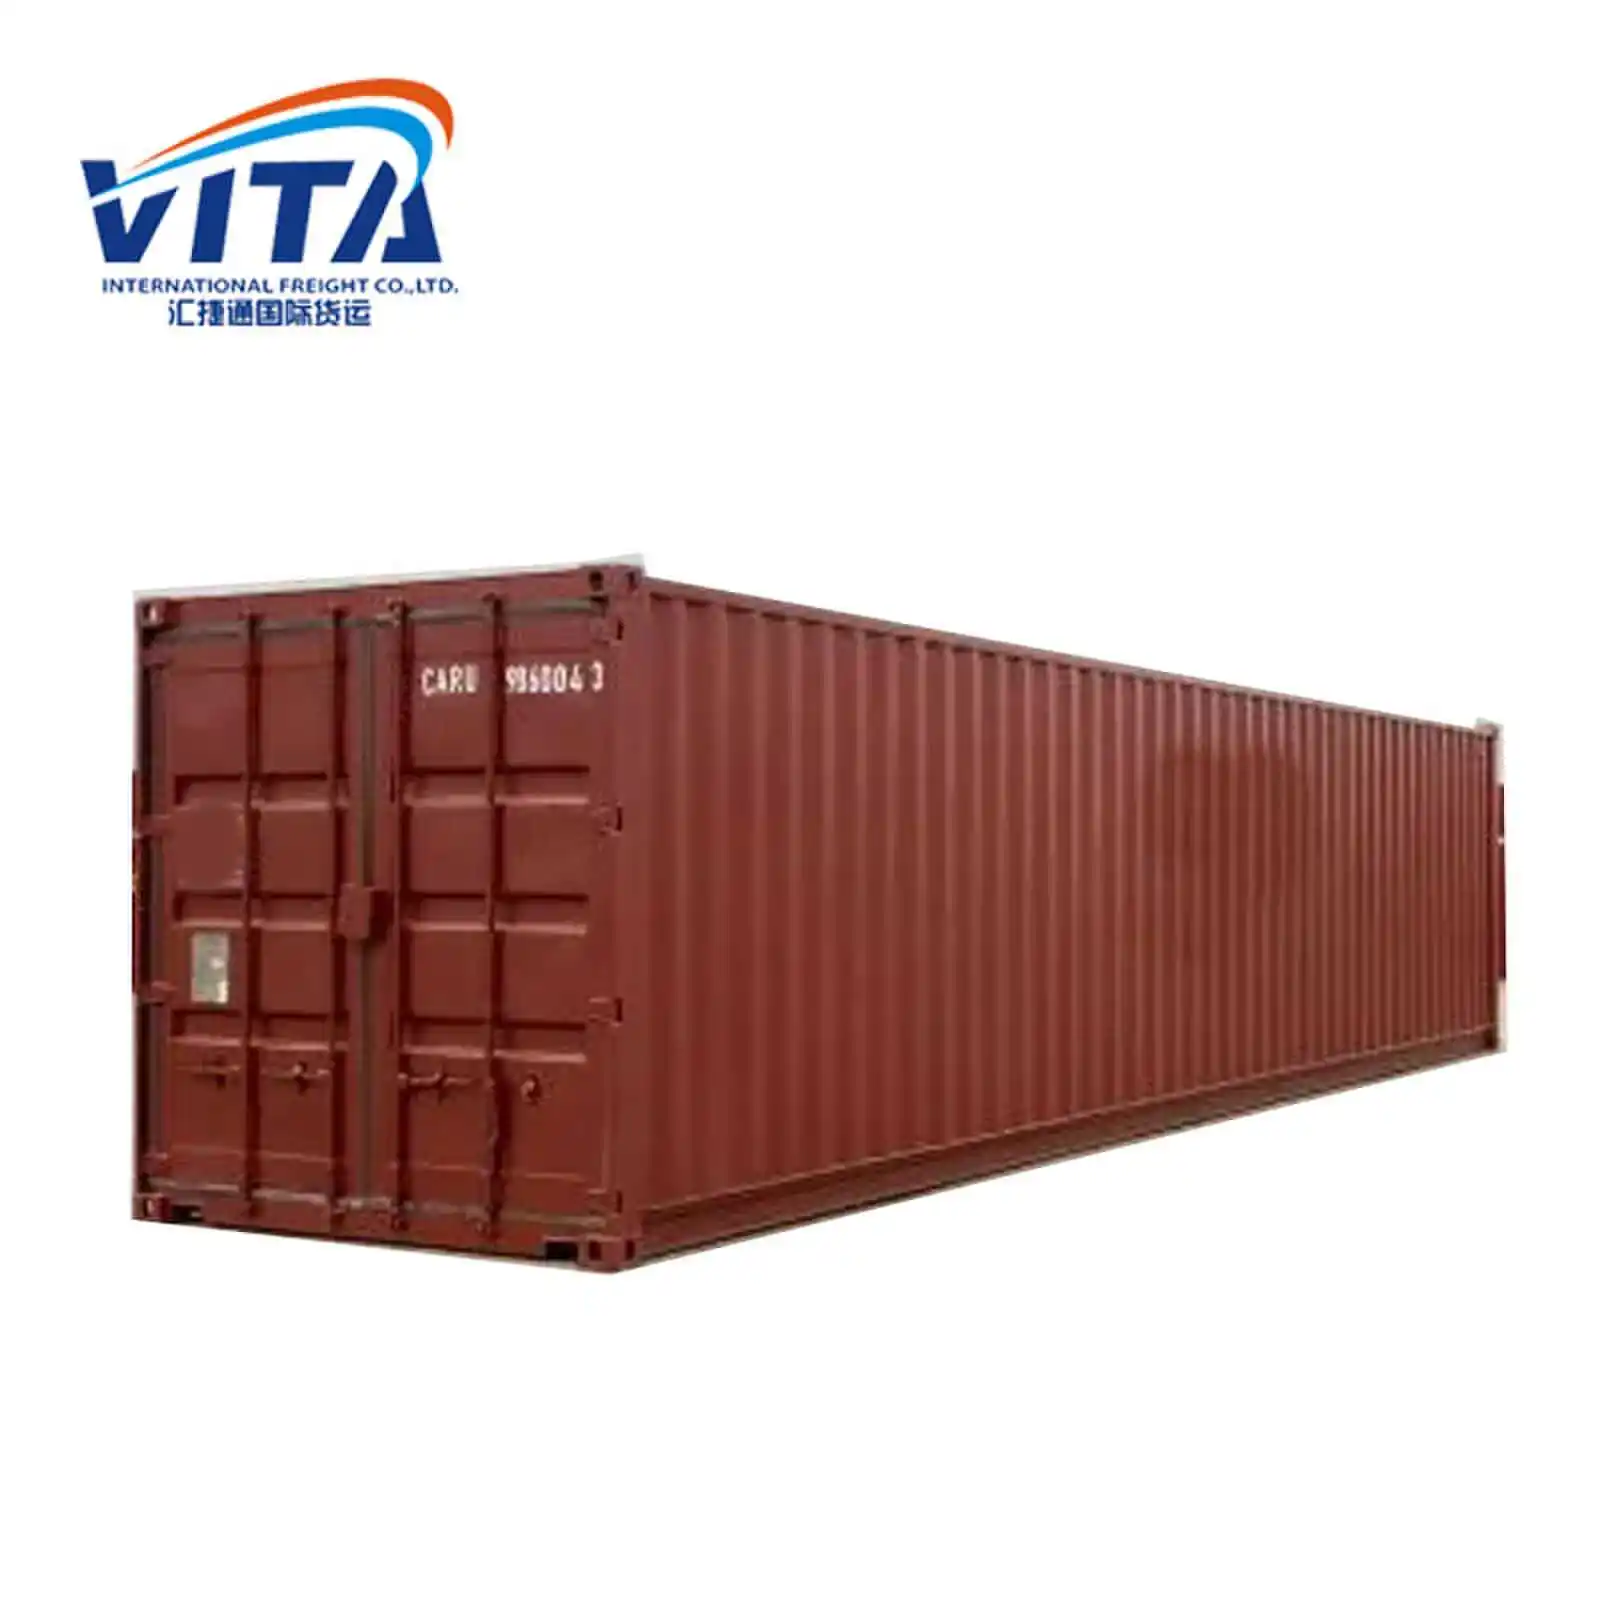 Contentor Container De Segunda Mão Container 40ft Contentor Alto Cubo Shandong 40ft Carga